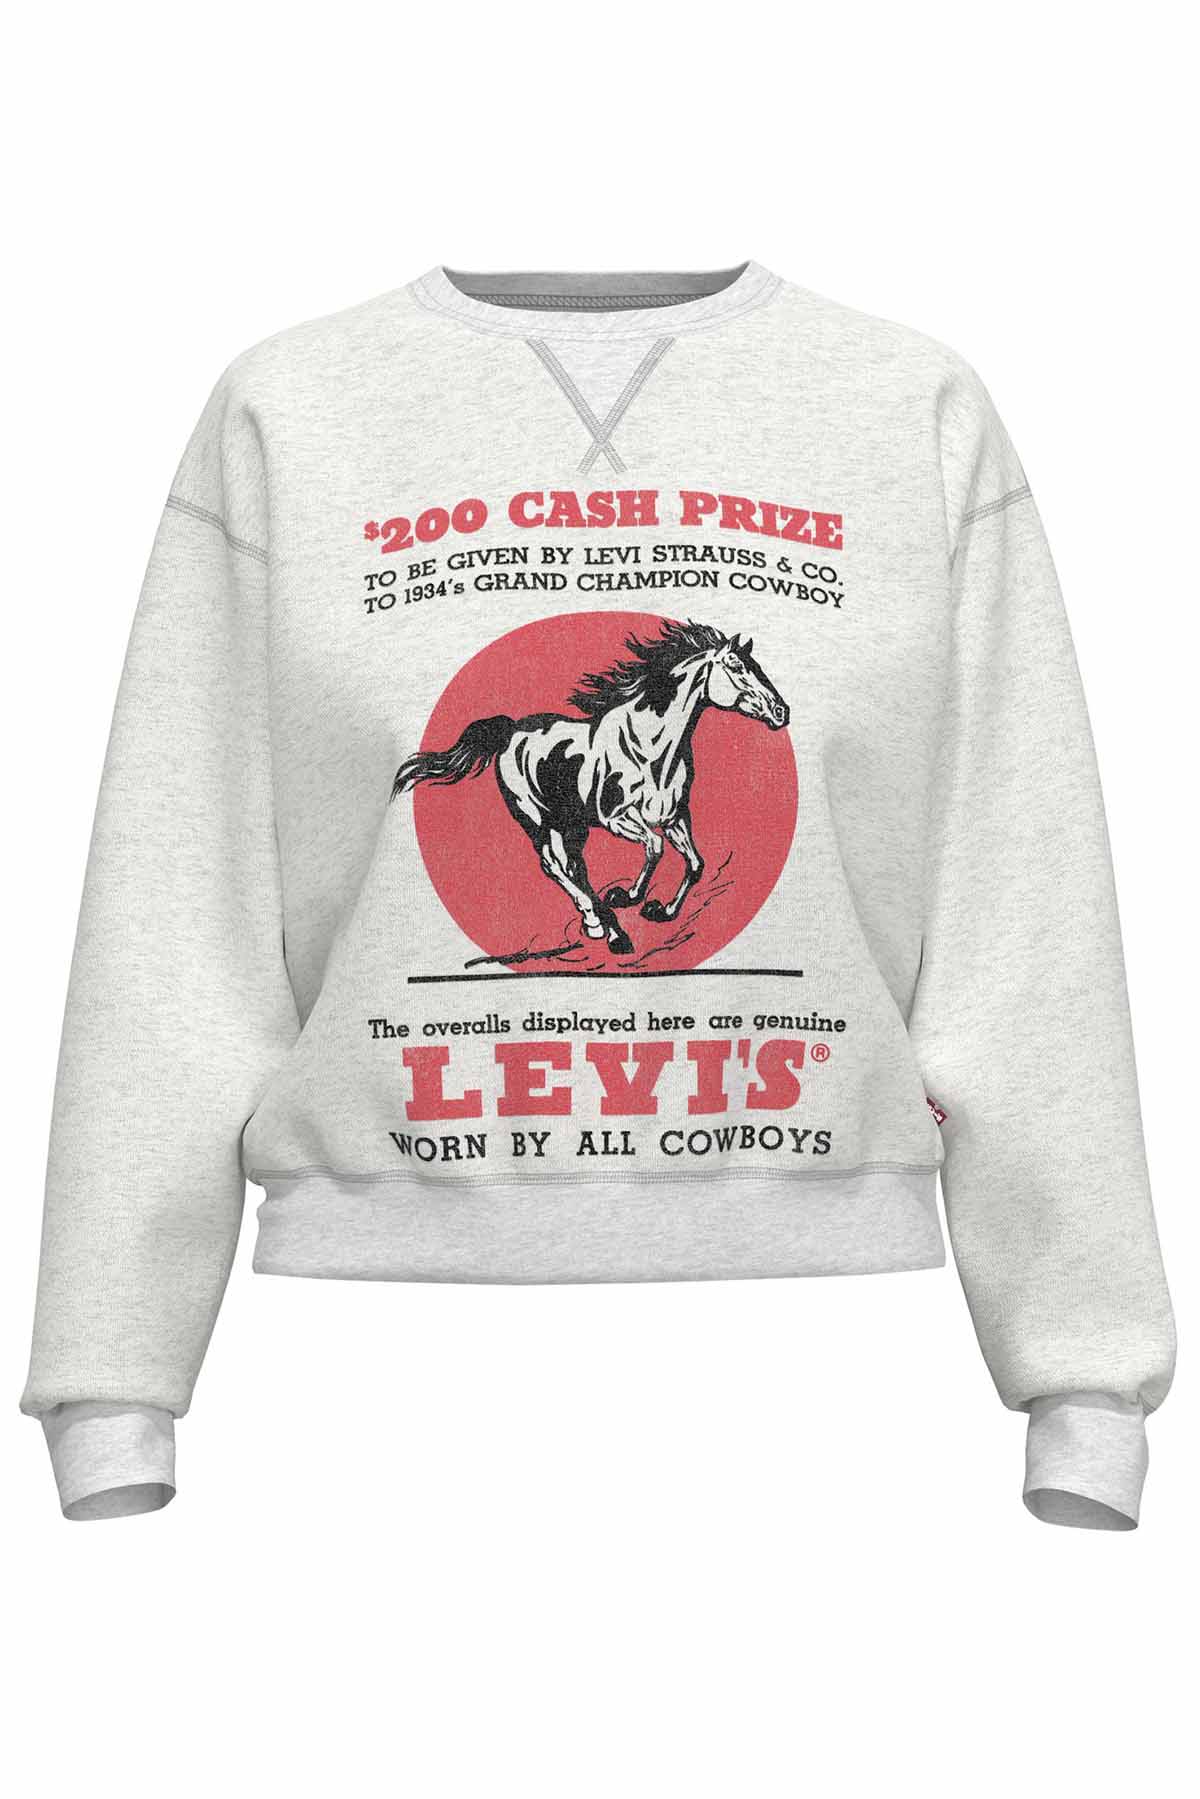 Levis - Graphic Heritage Crew - Cash Prize - Front